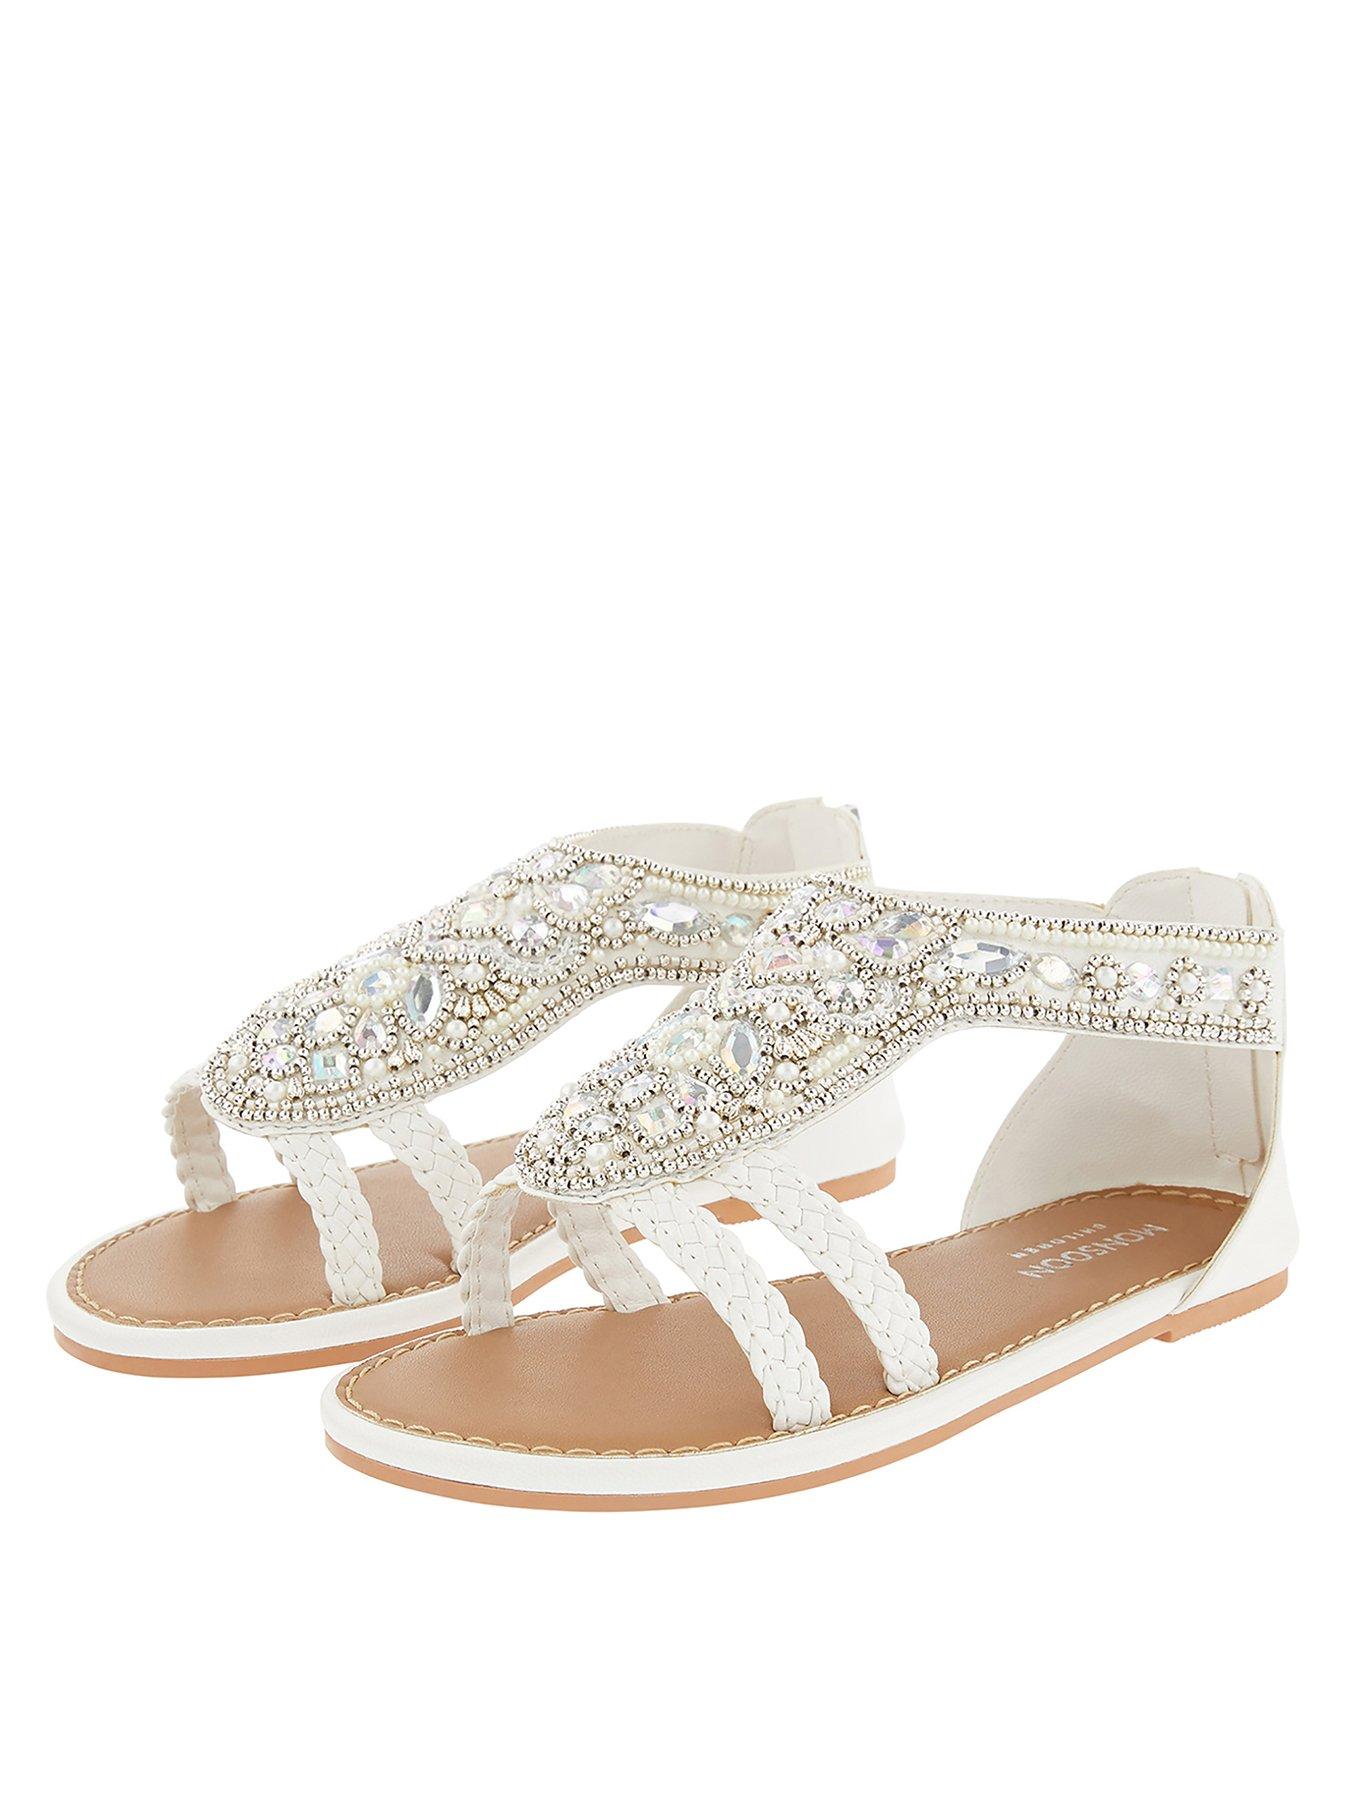 Shoes & boots Girls Diamond Shape Beaded Sandal - White